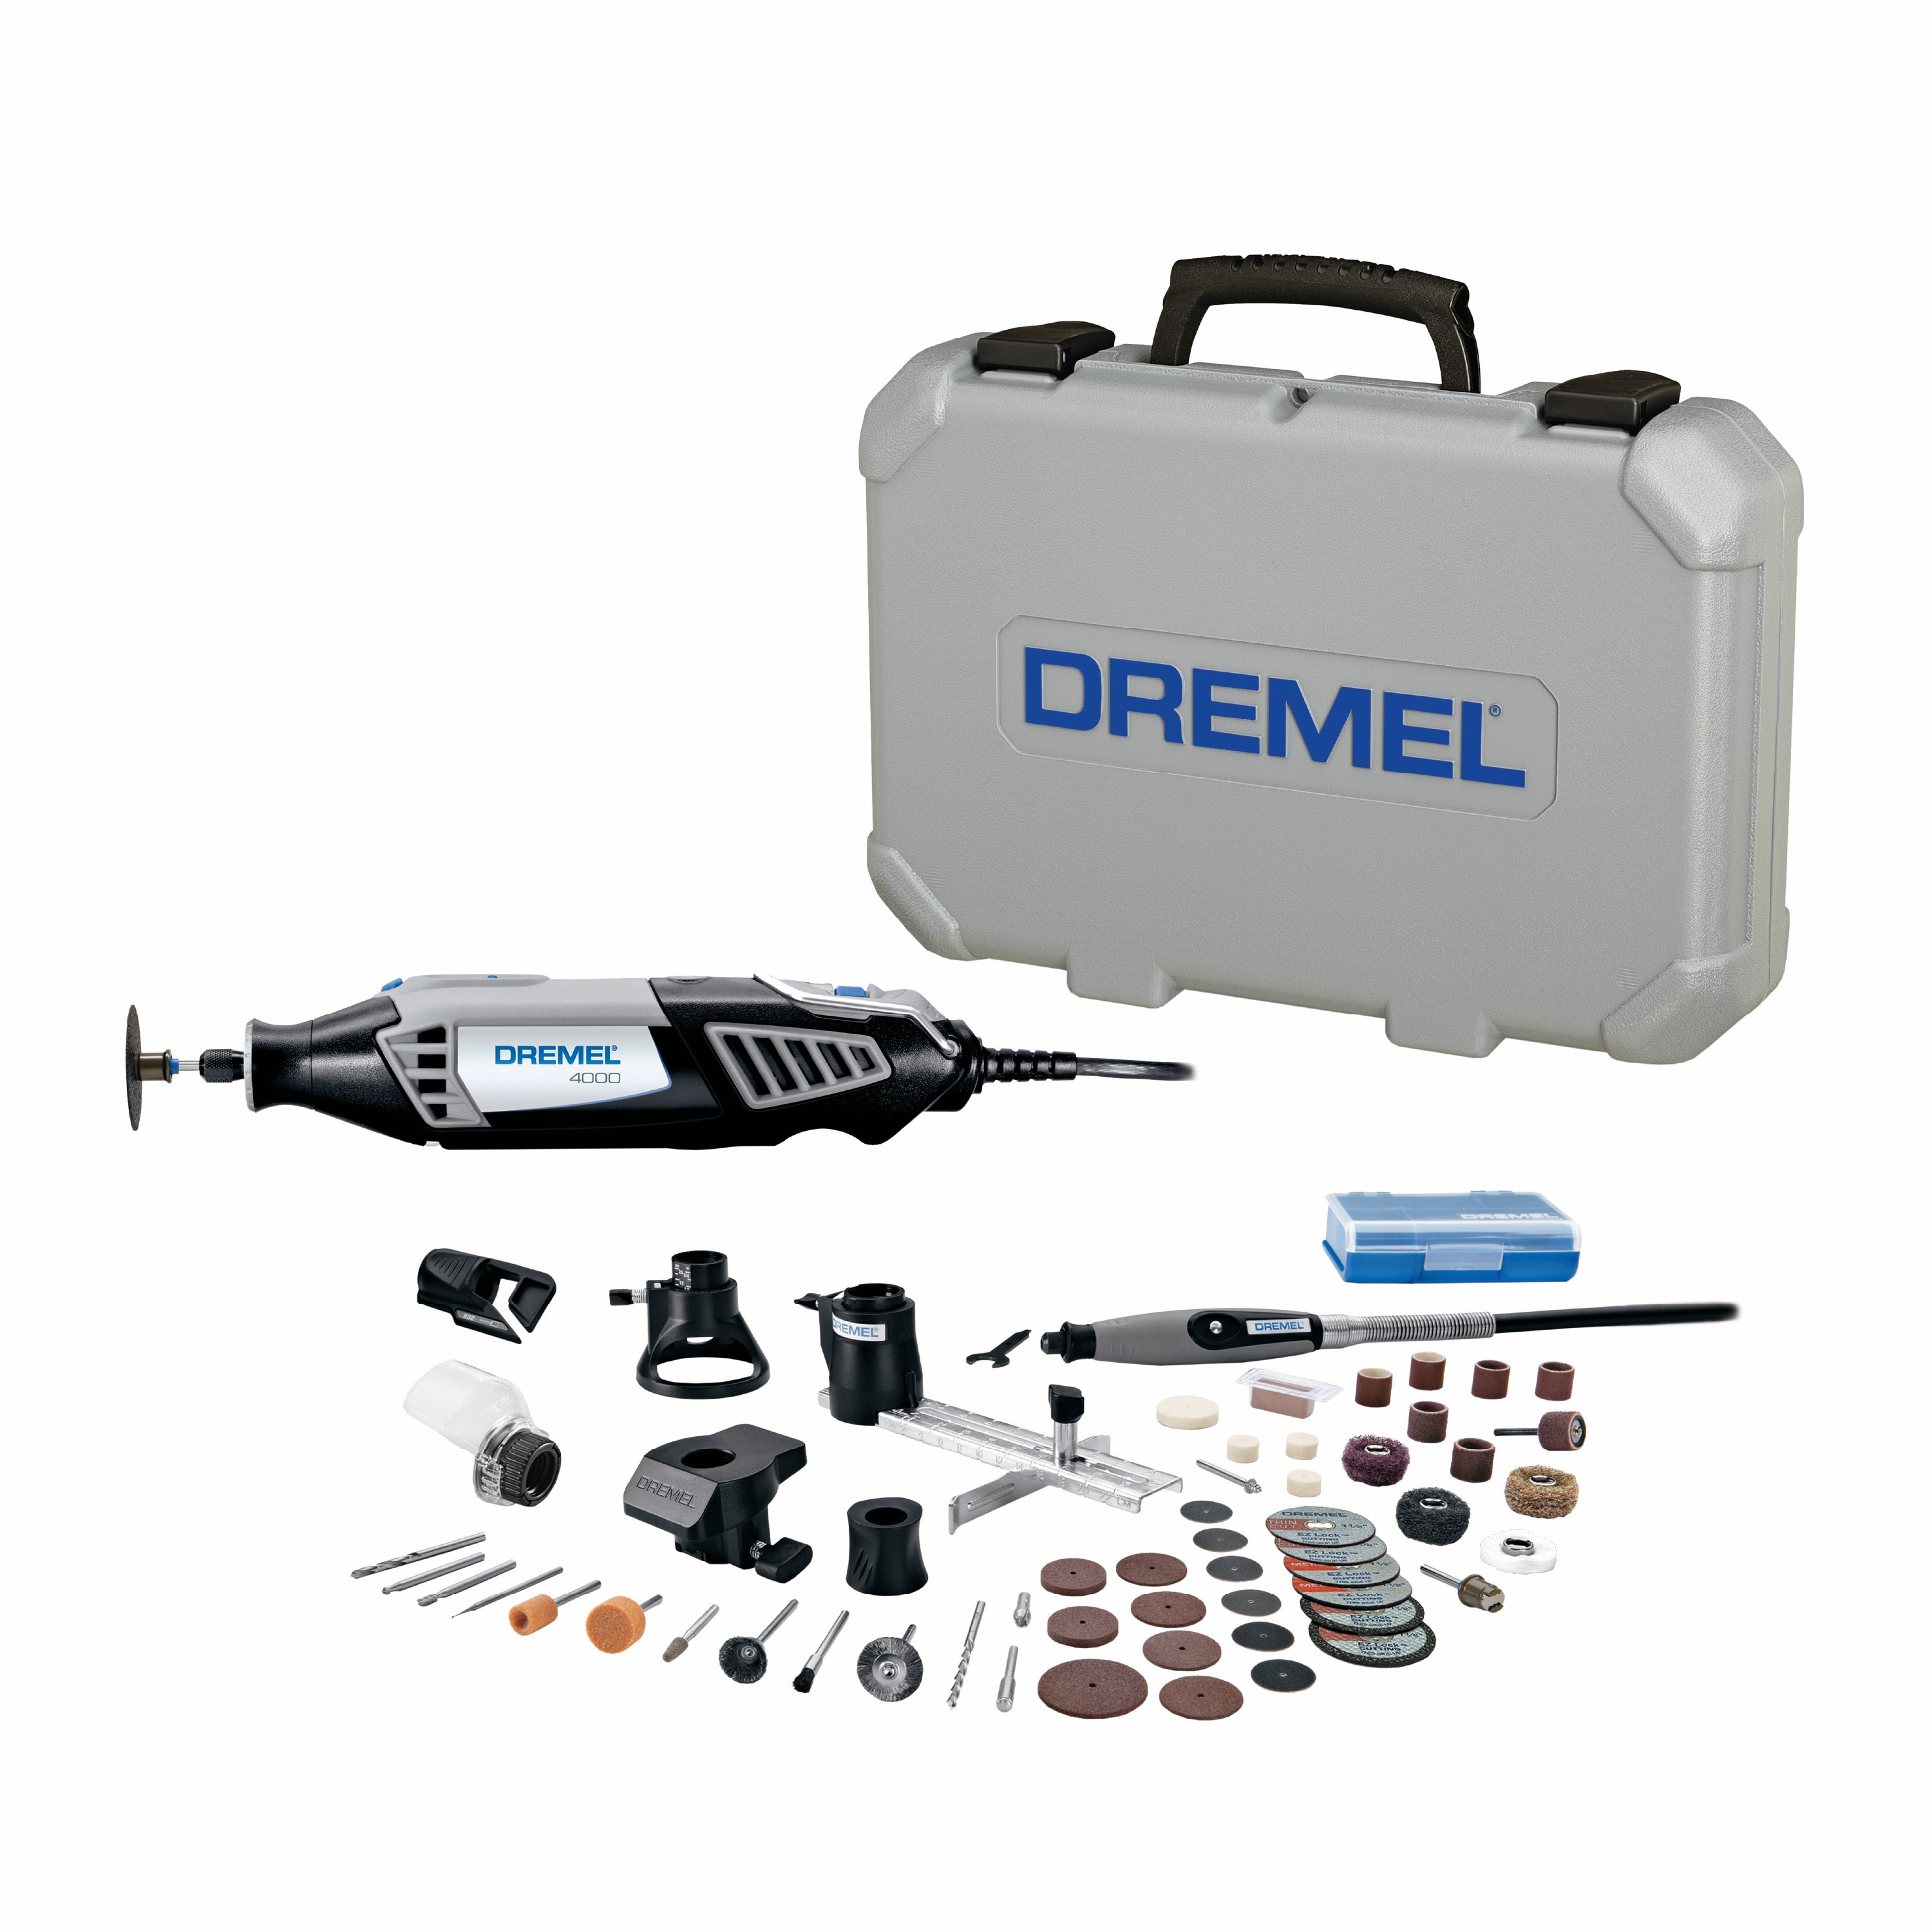 Dremel 4000-2/30 Variable-Speed High-Performance Rotary Tool Kit, 120 V